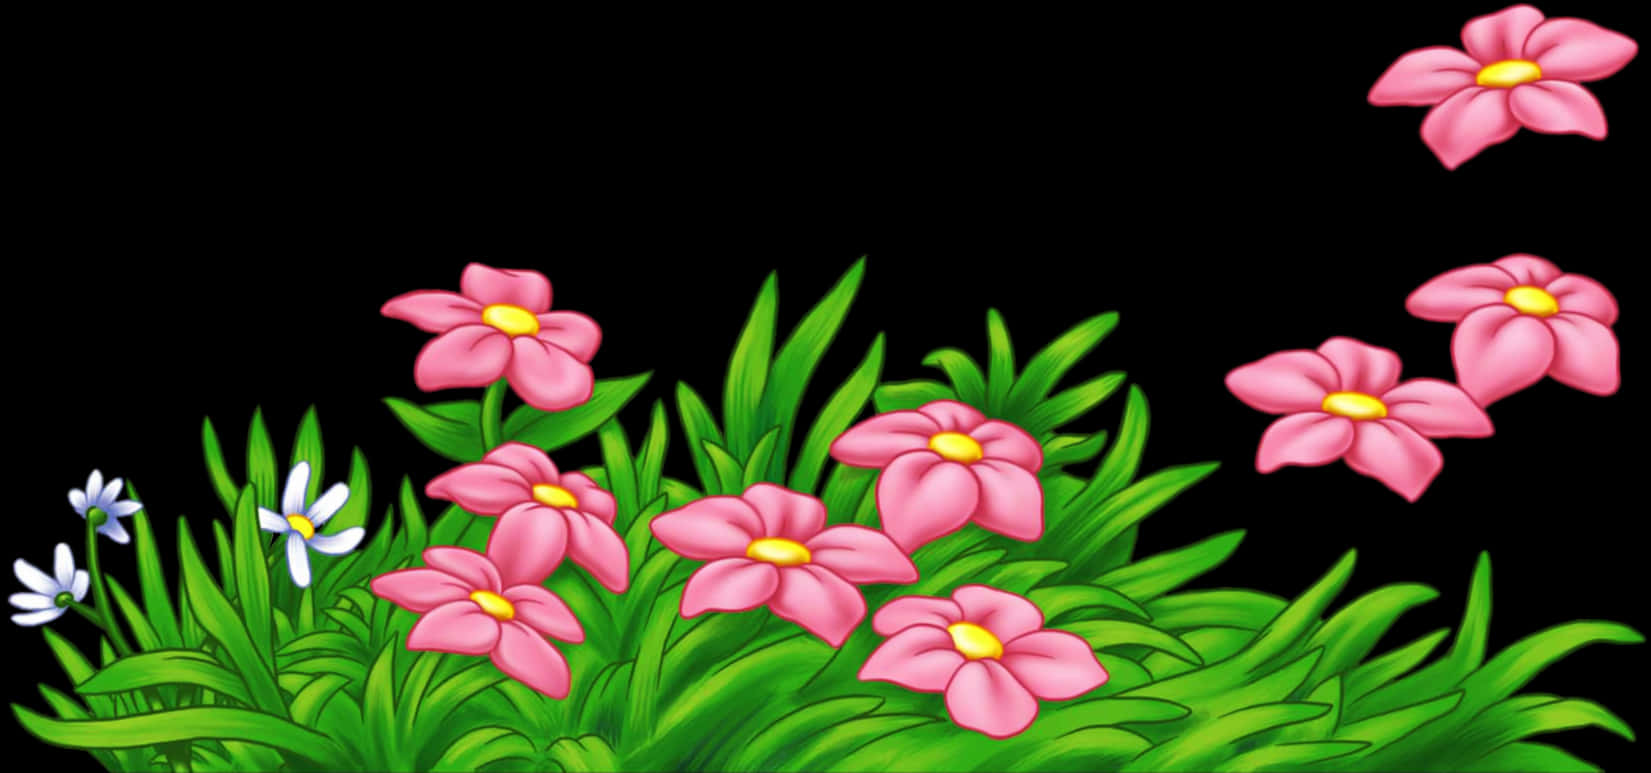 Vibrant Flowers Against Black Background PNG